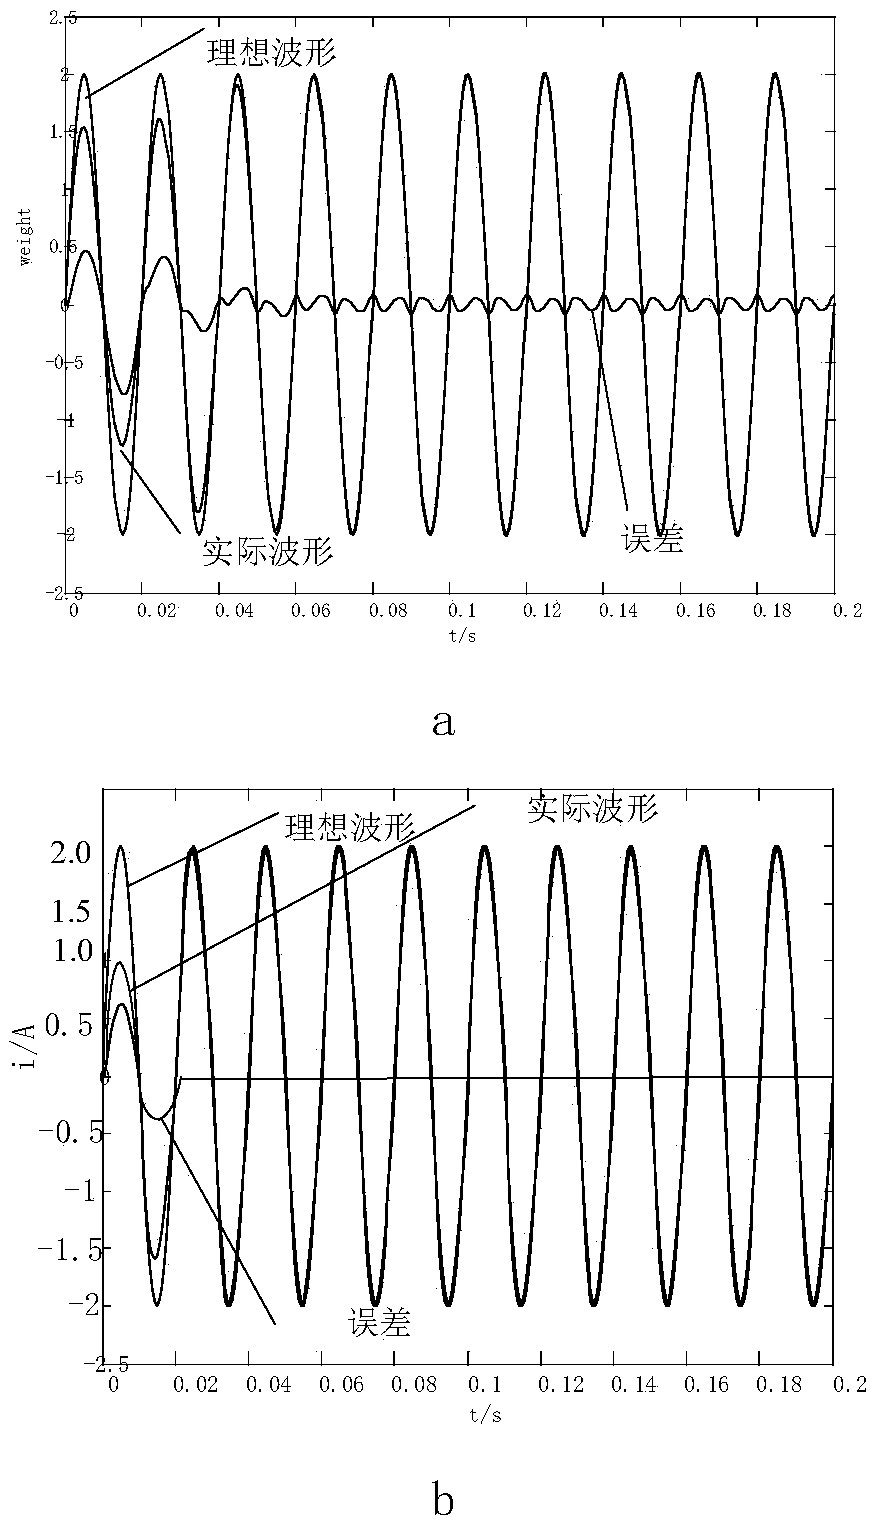 Variable-step LMS adaptive harmonic current detection method